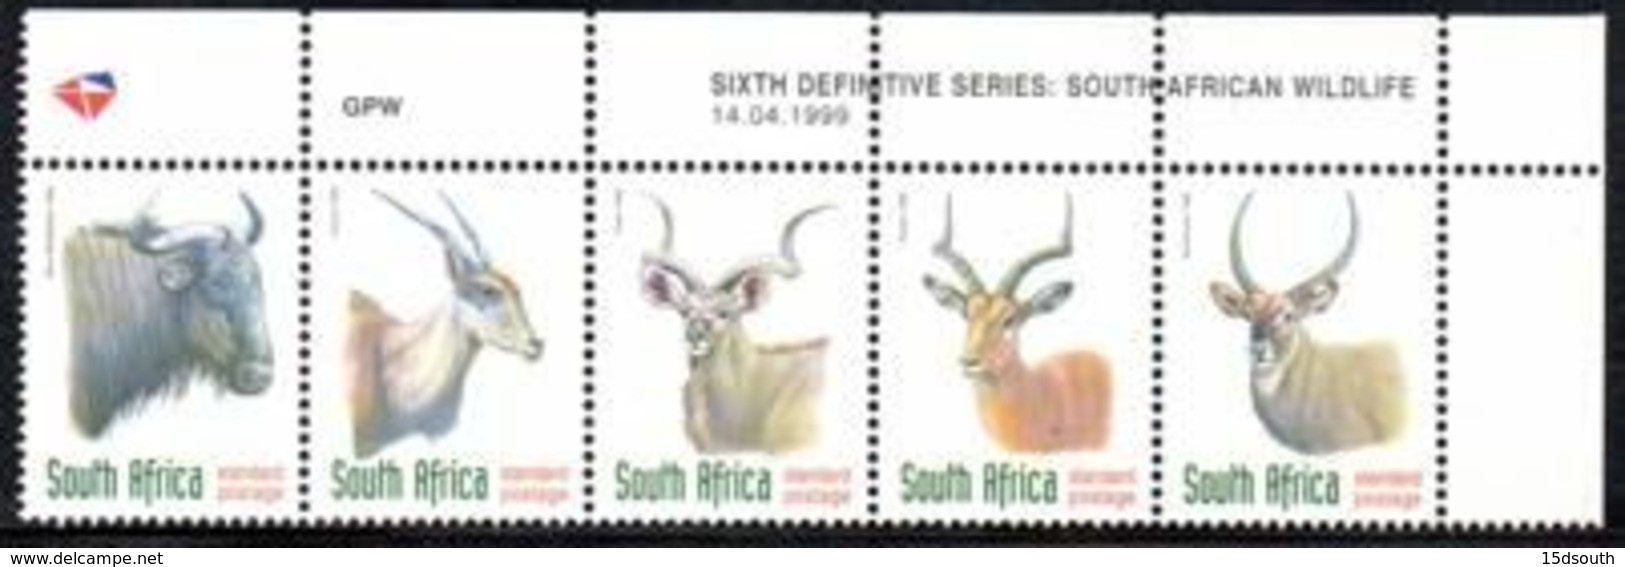 South Africa - 1999 Redrawn 6th Definitive SPR Antelopes Control Block (1999.04.14) (**) - Blocks & Kleinbögen